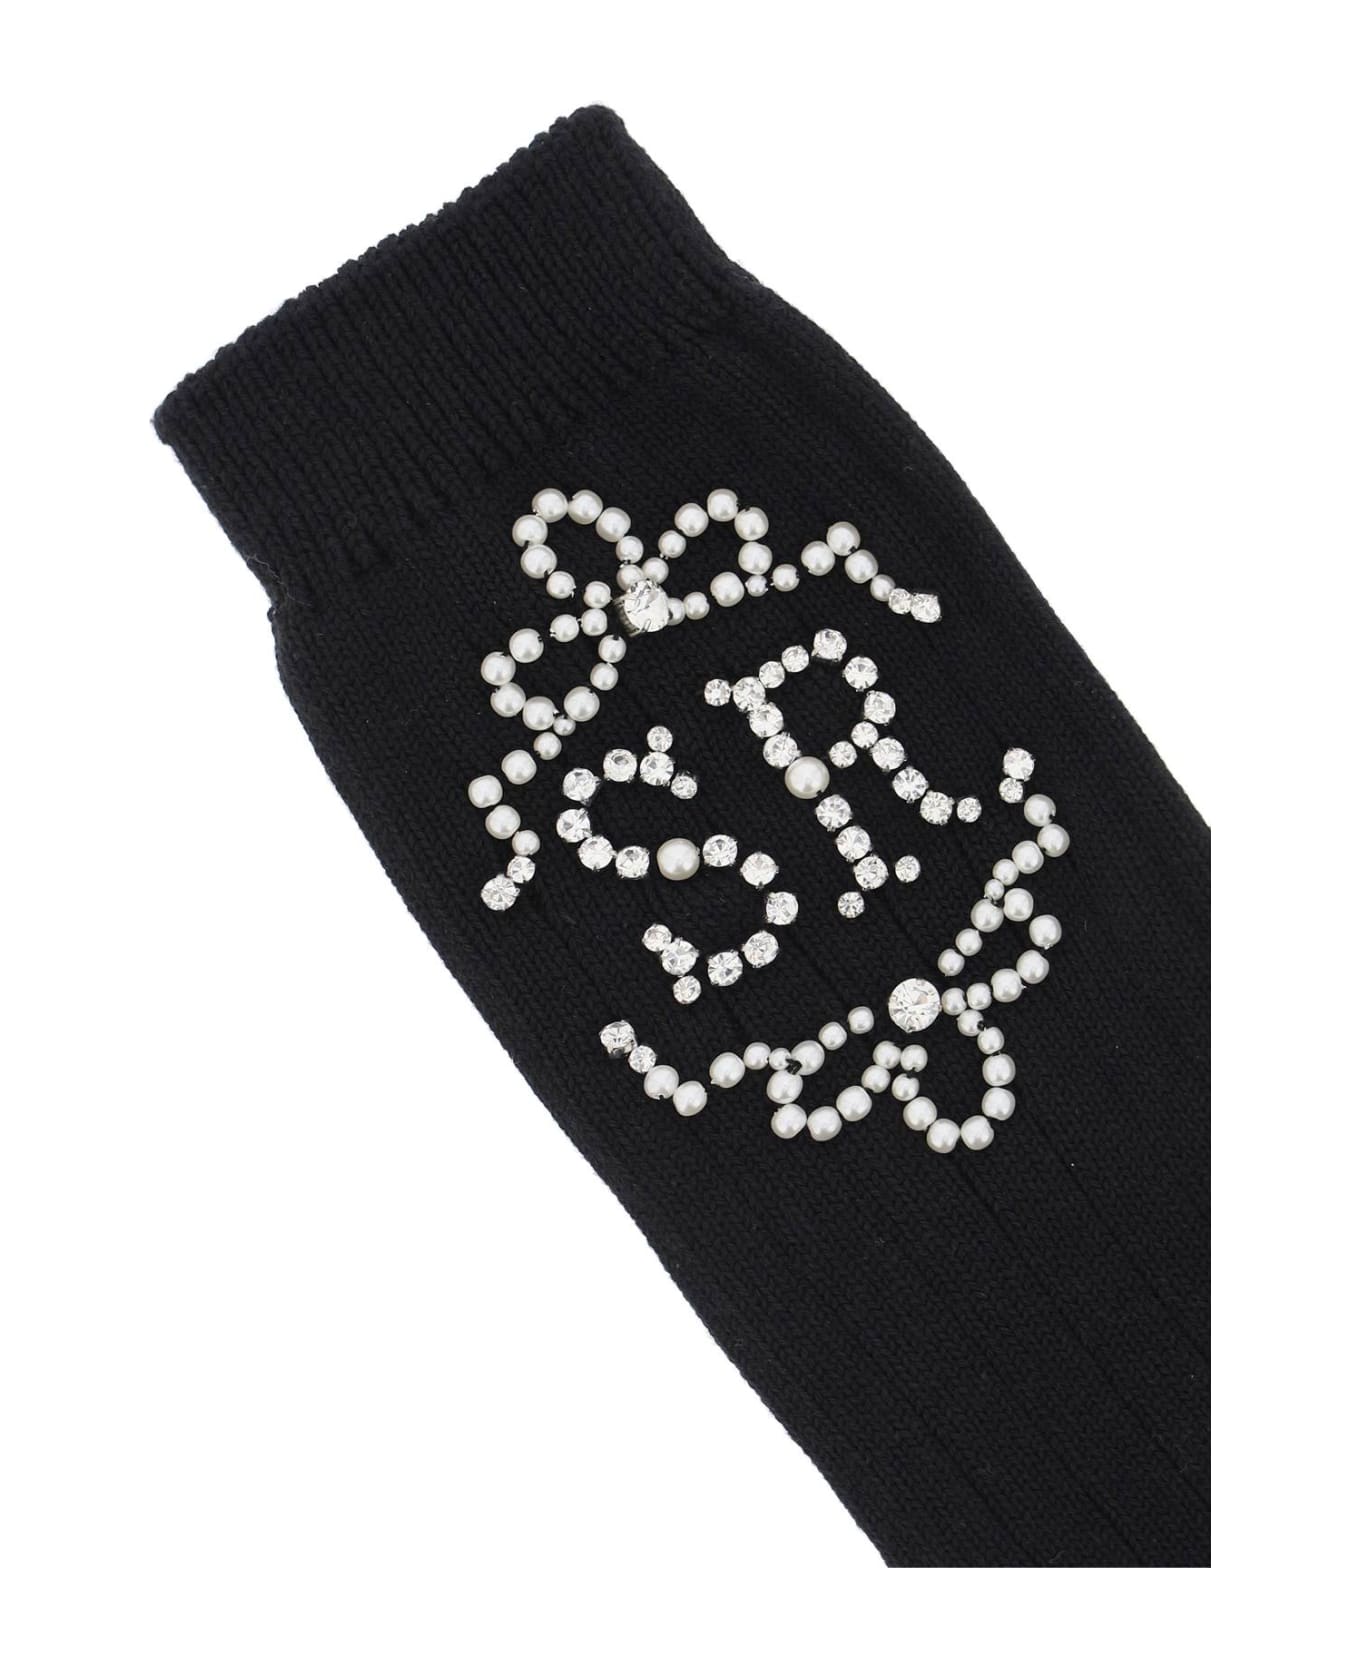 Simone Rocha Sr Socks With Pearls And Crystals - BLACK PEARL CRYSTAL (Black)